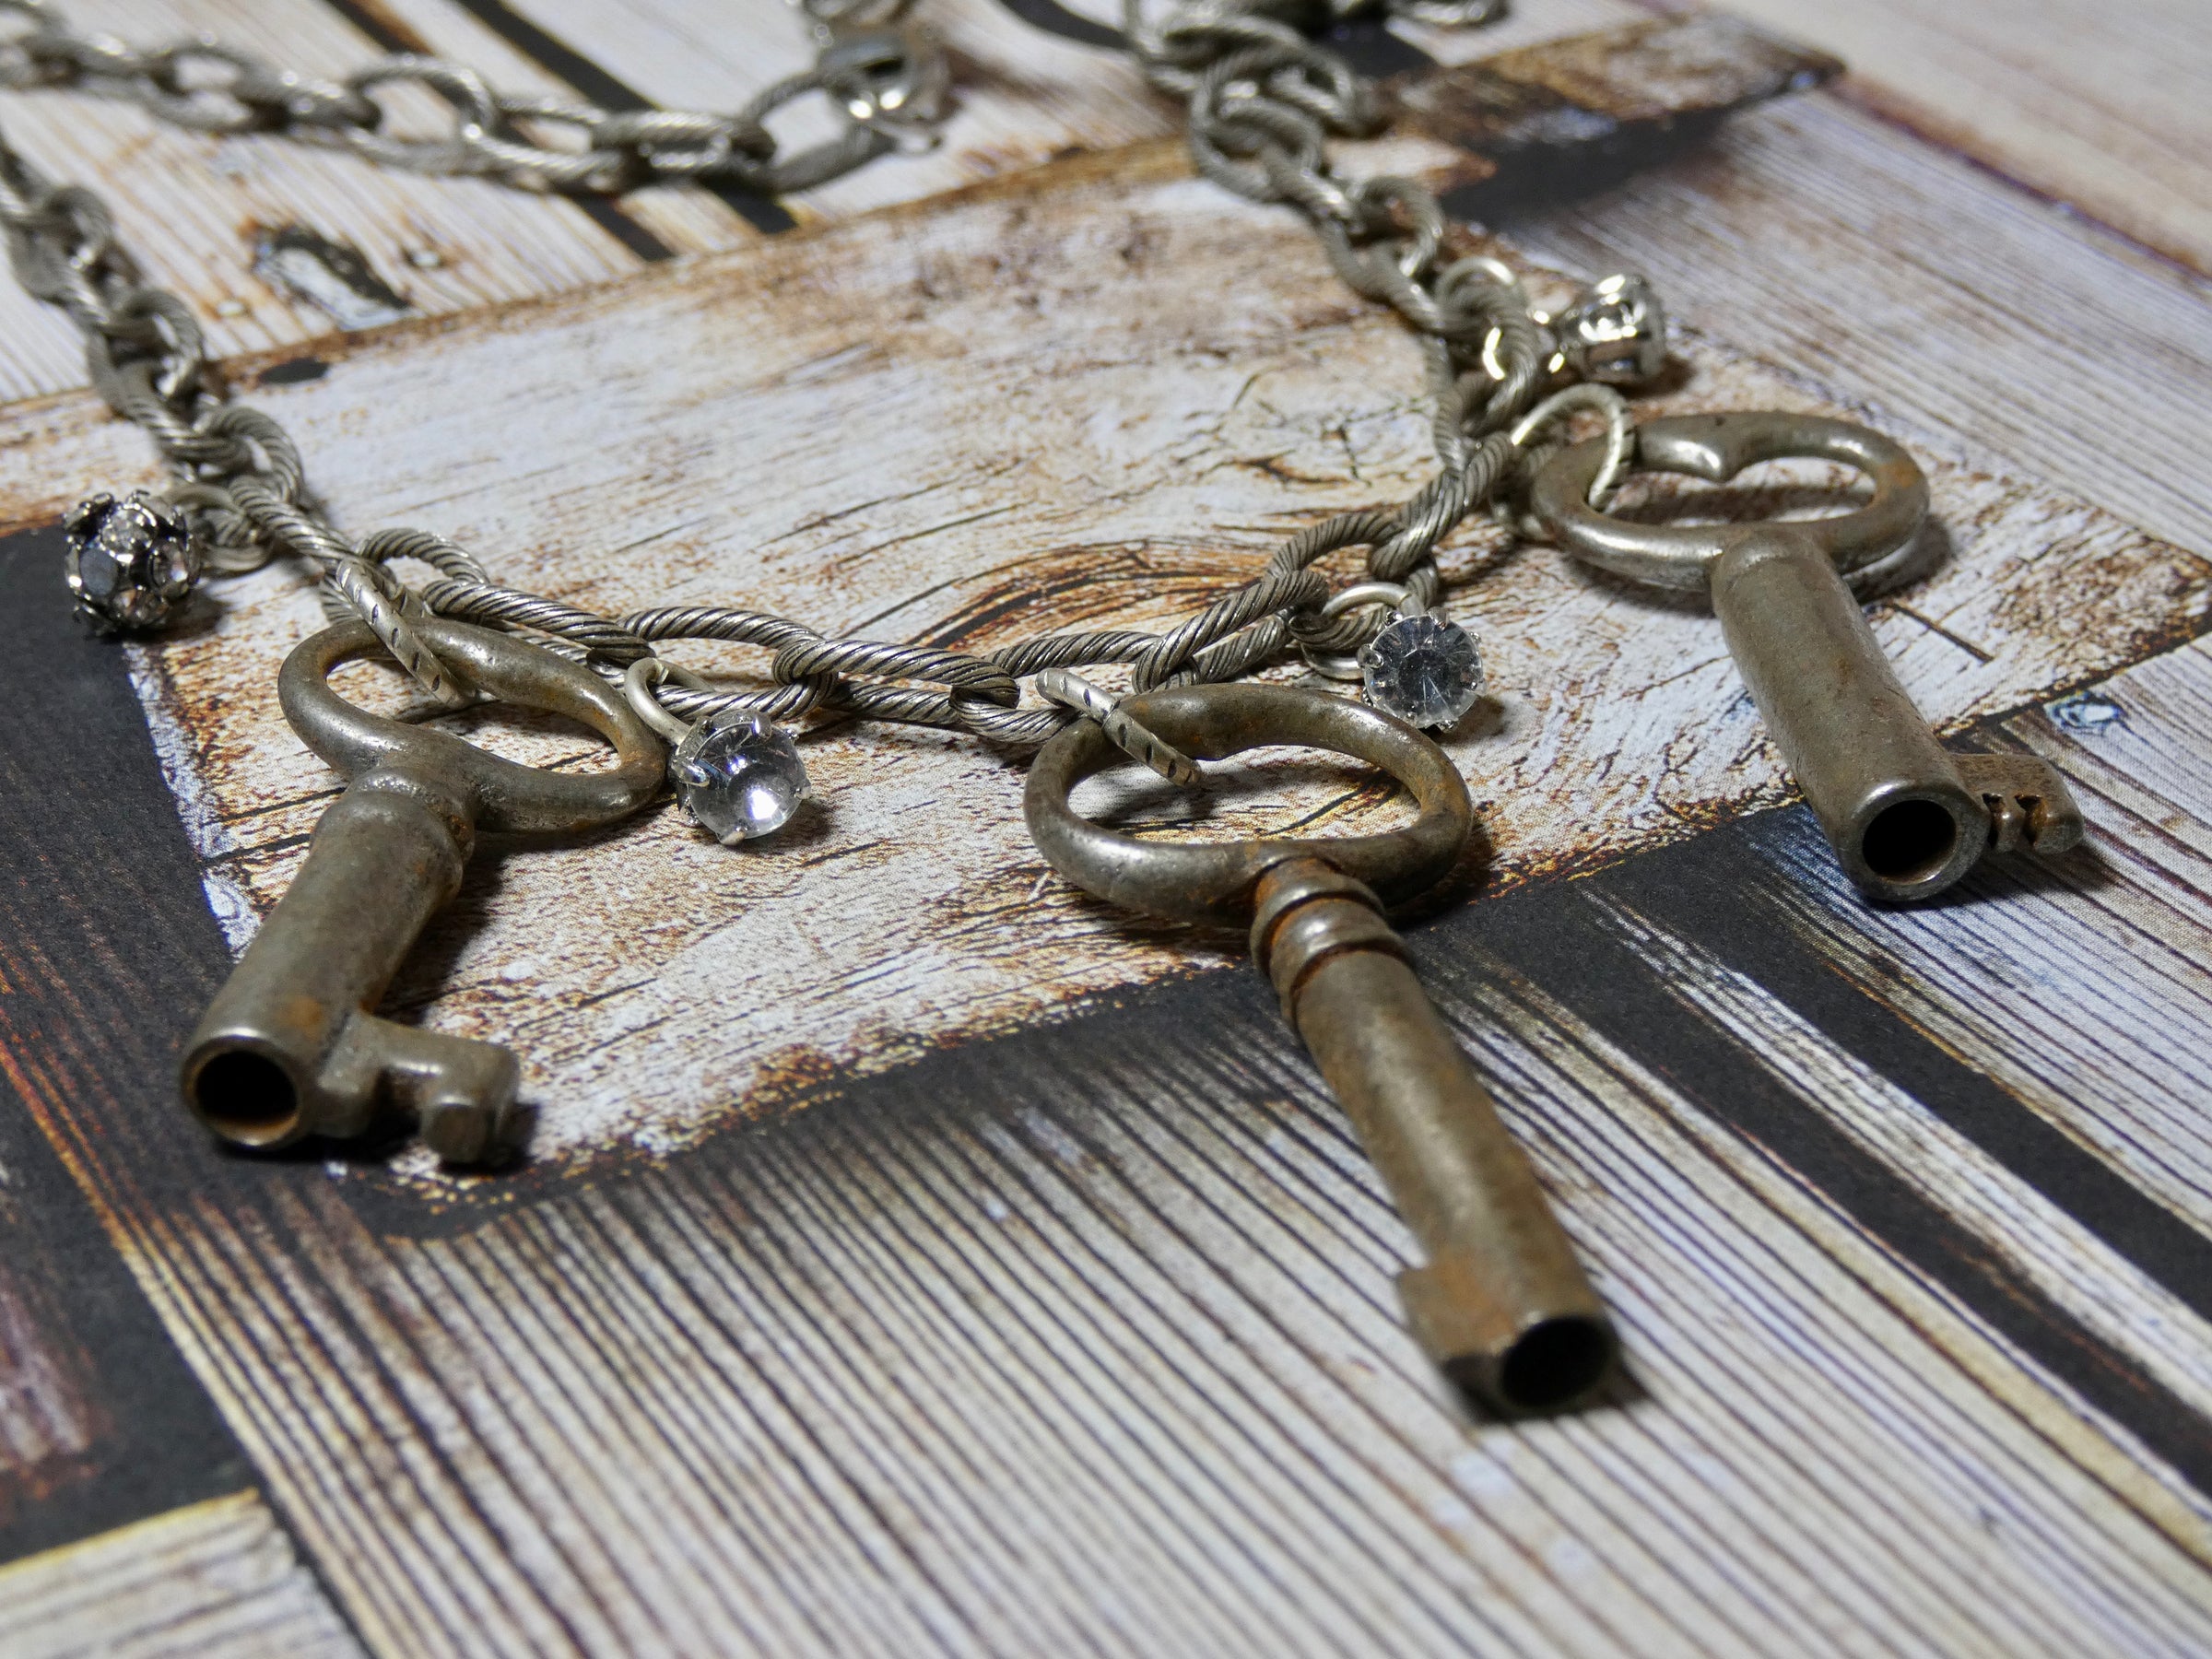 silver key necklace